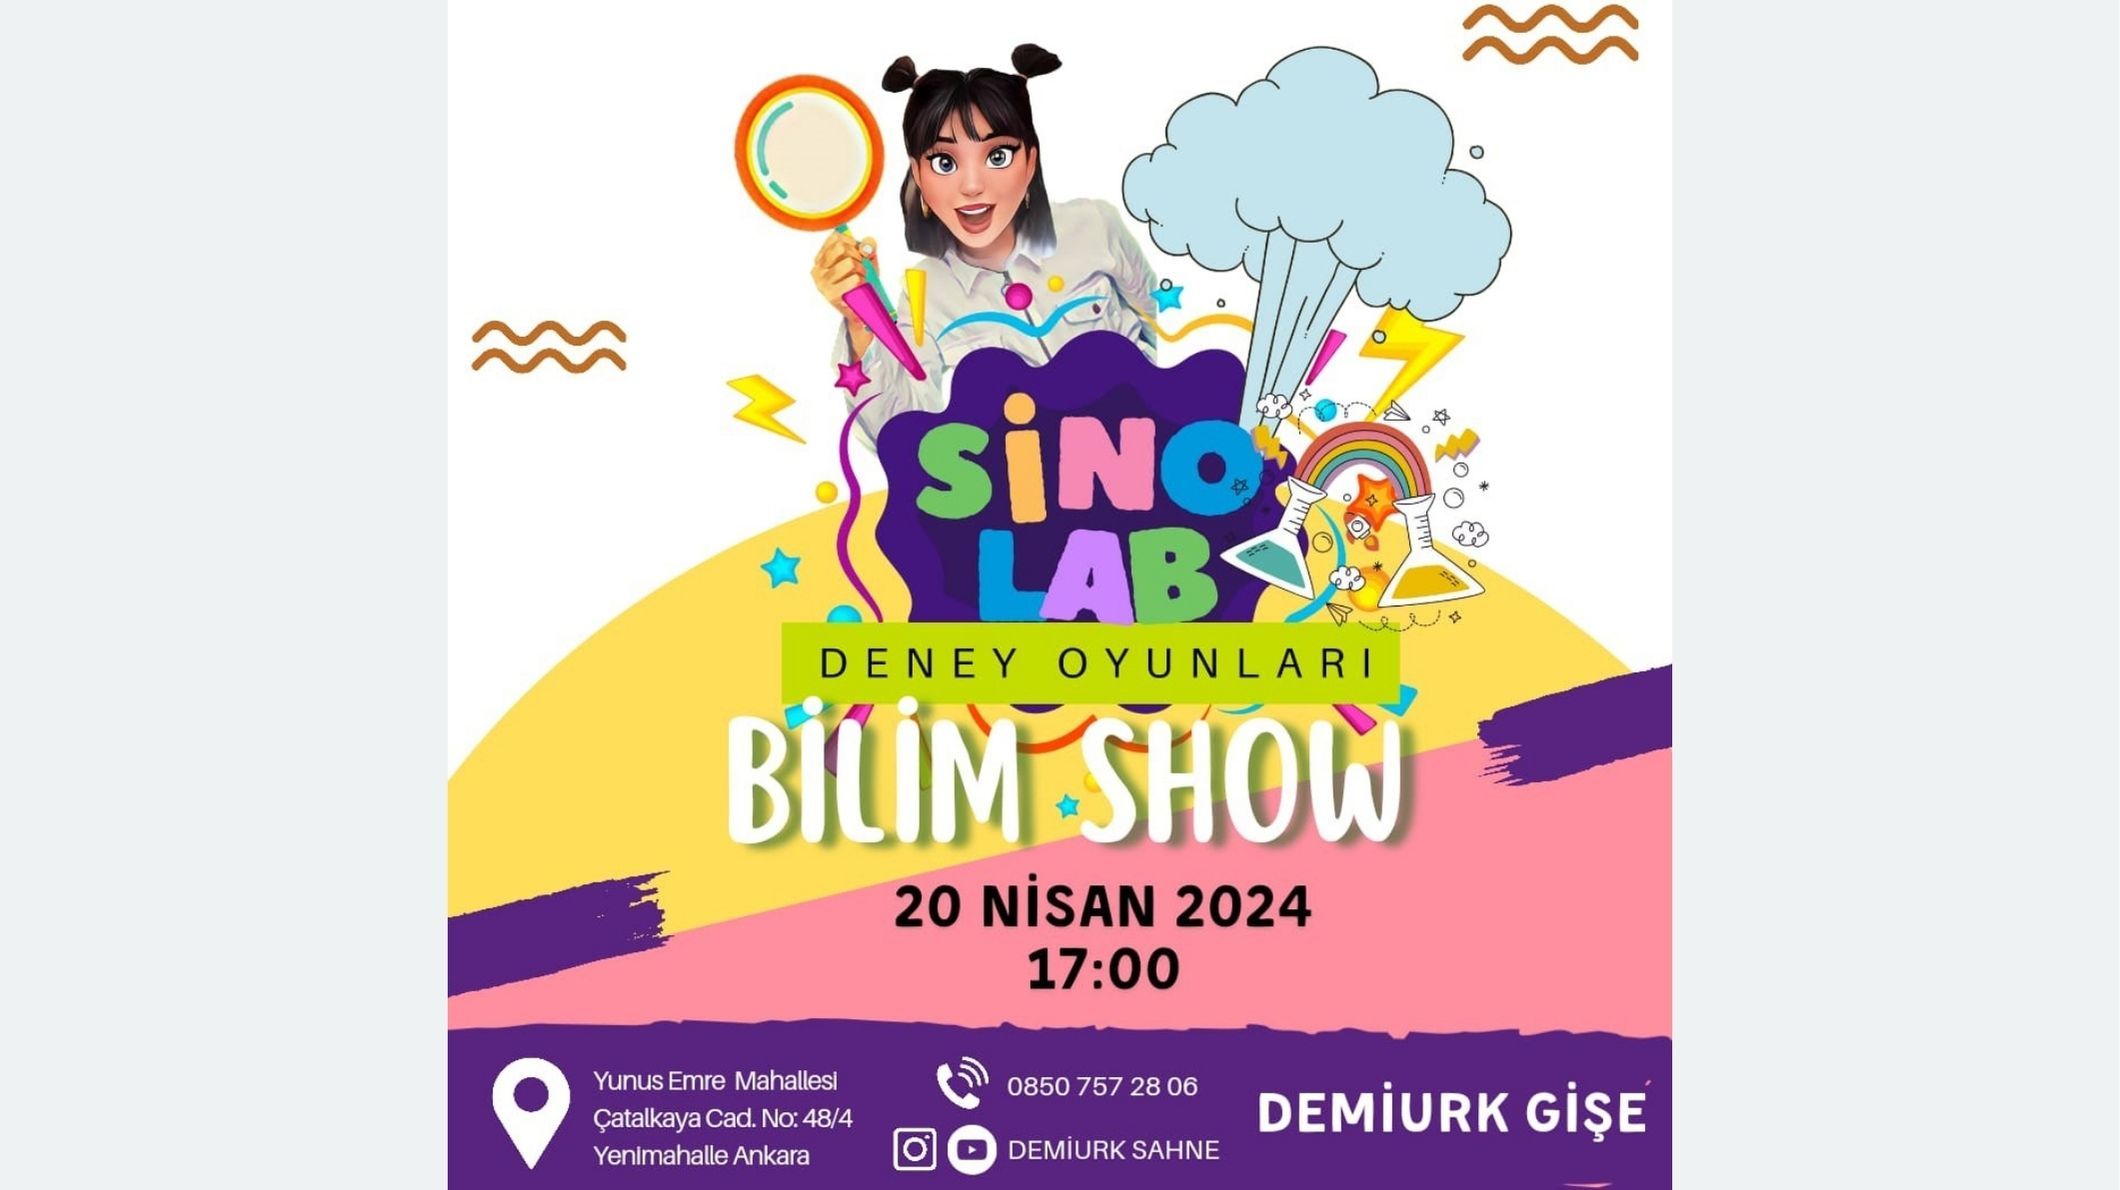 Bilim Show - Demiurk Sahne - Ankara